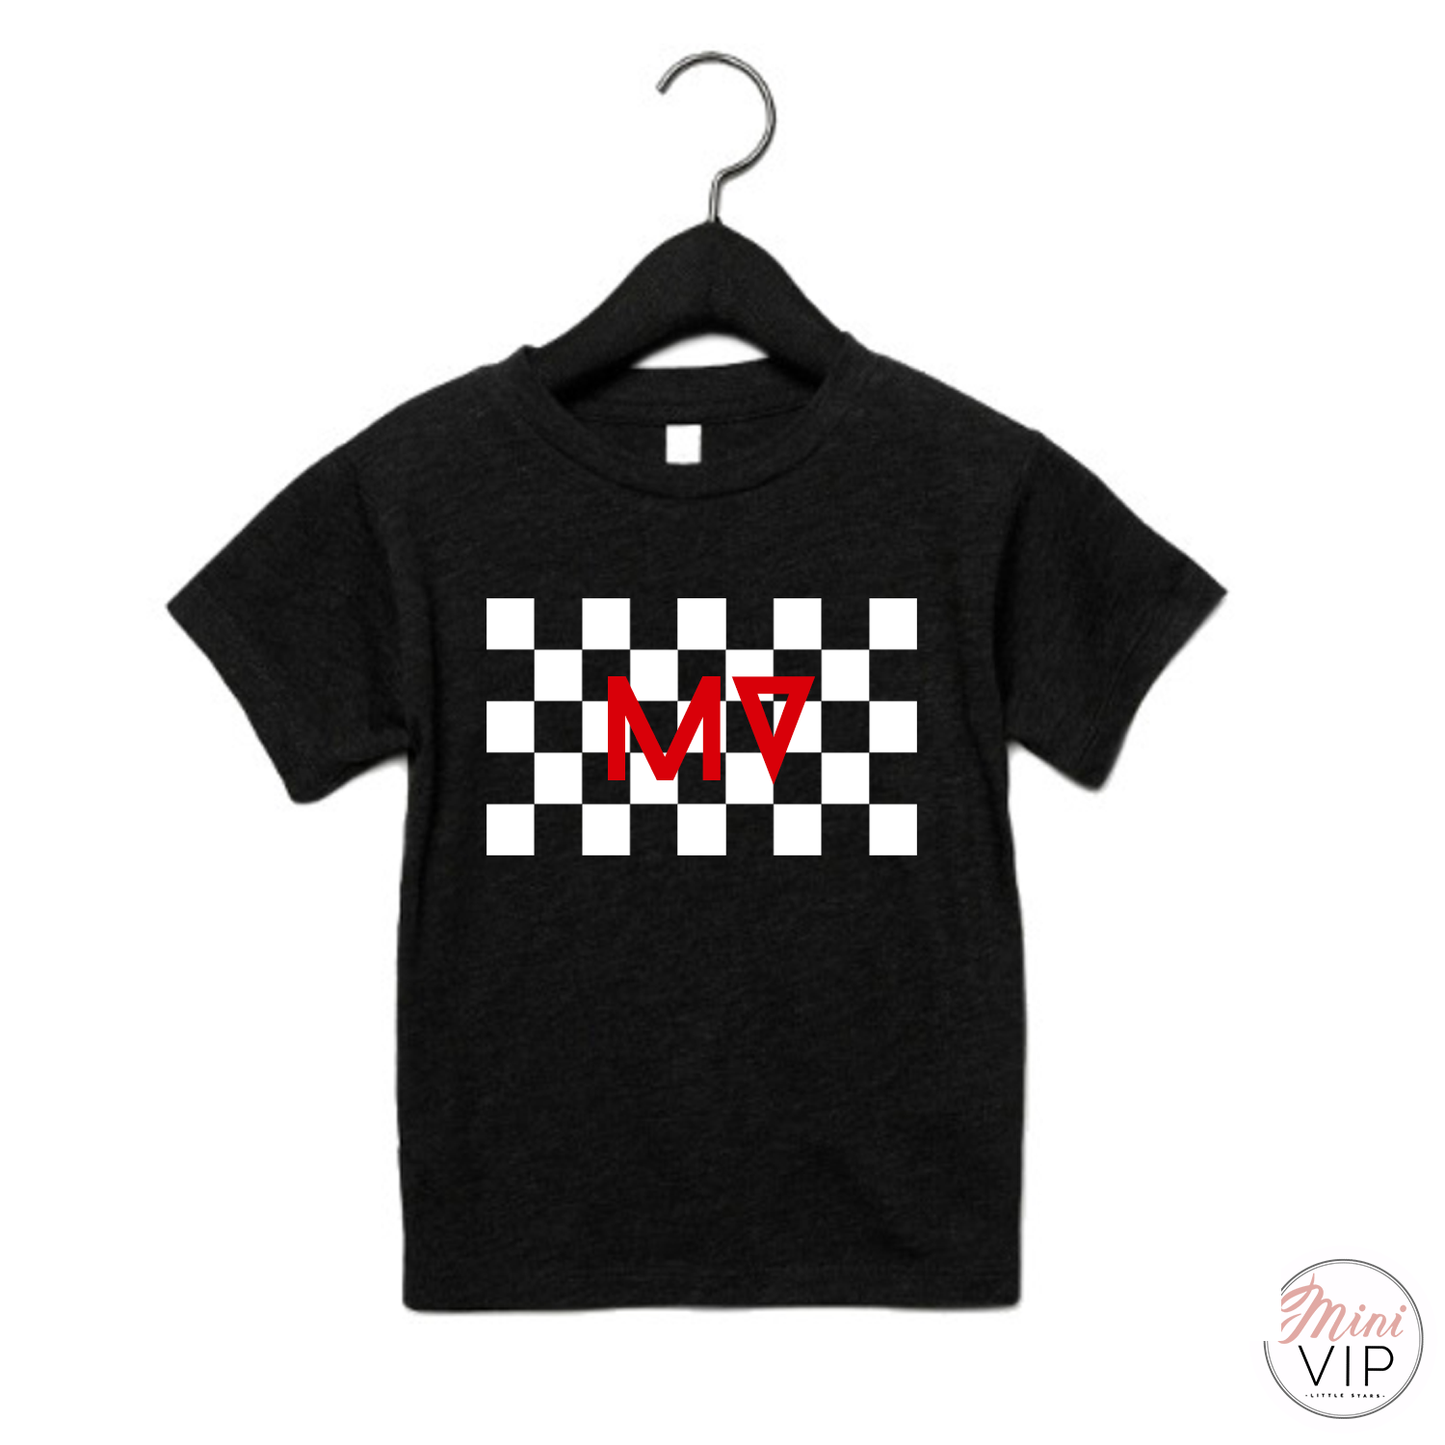 MV checkered t-shirt